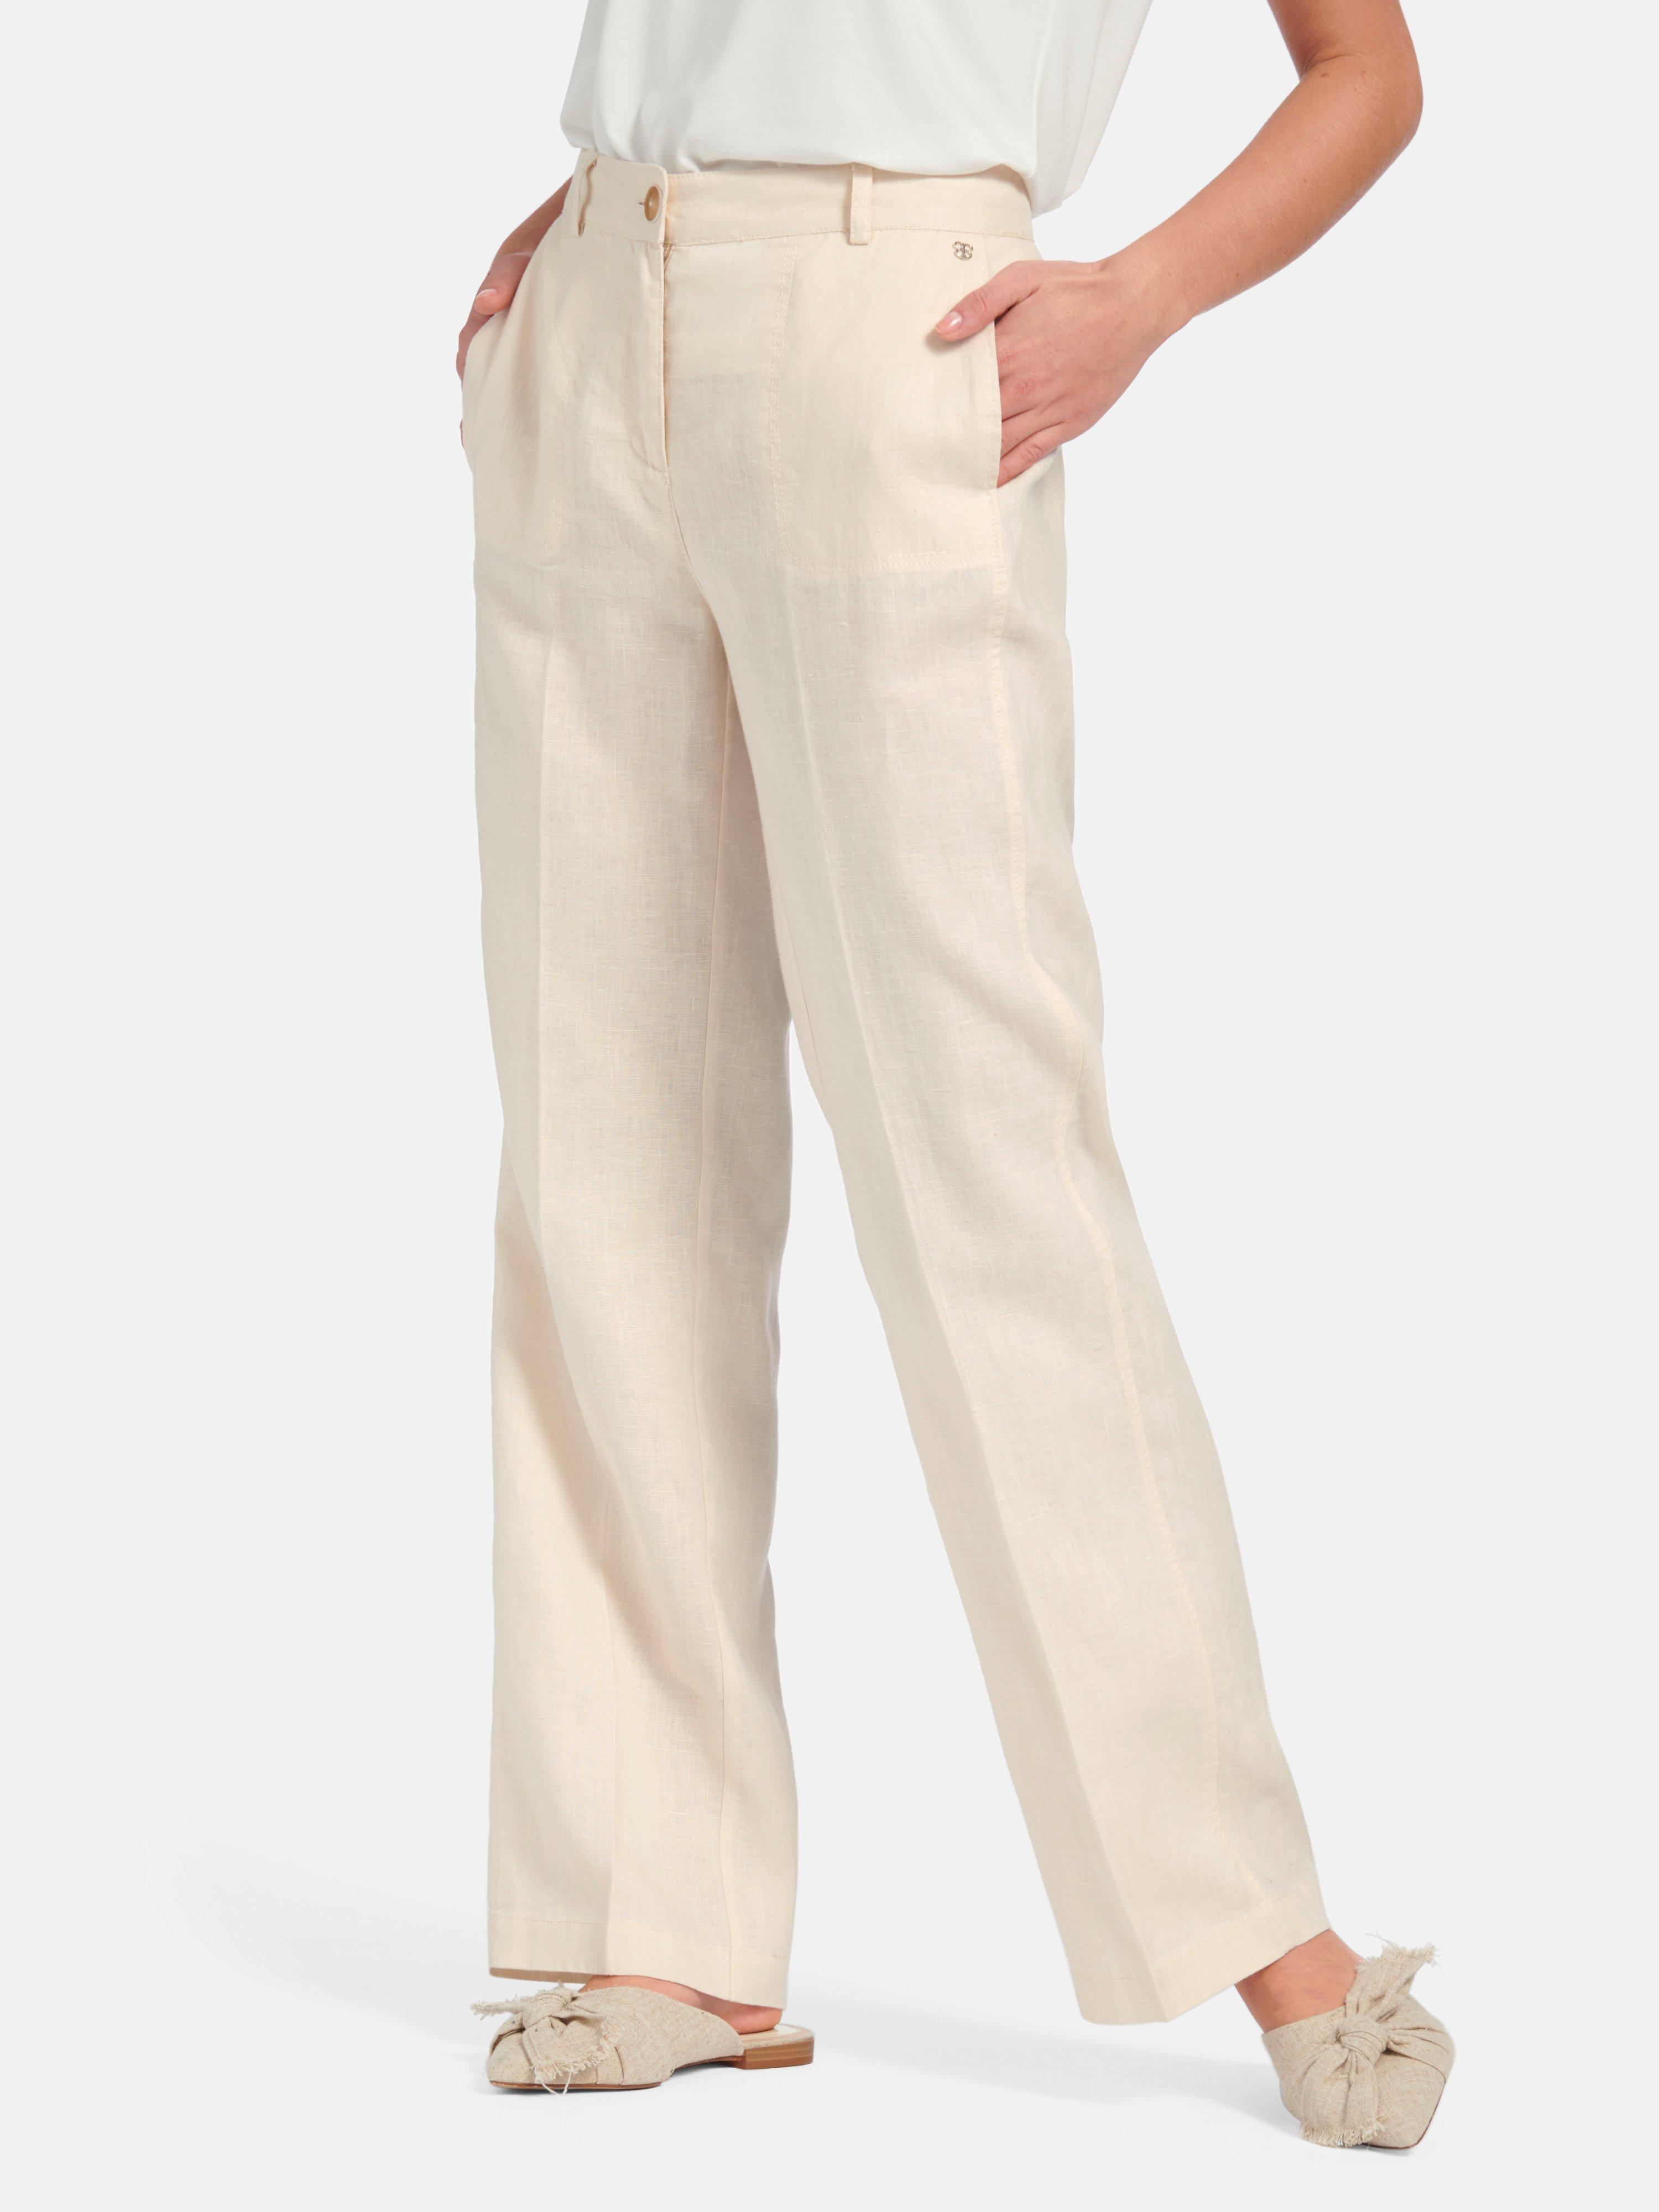 Basler - Le pantalon 100% lin modèle Bea